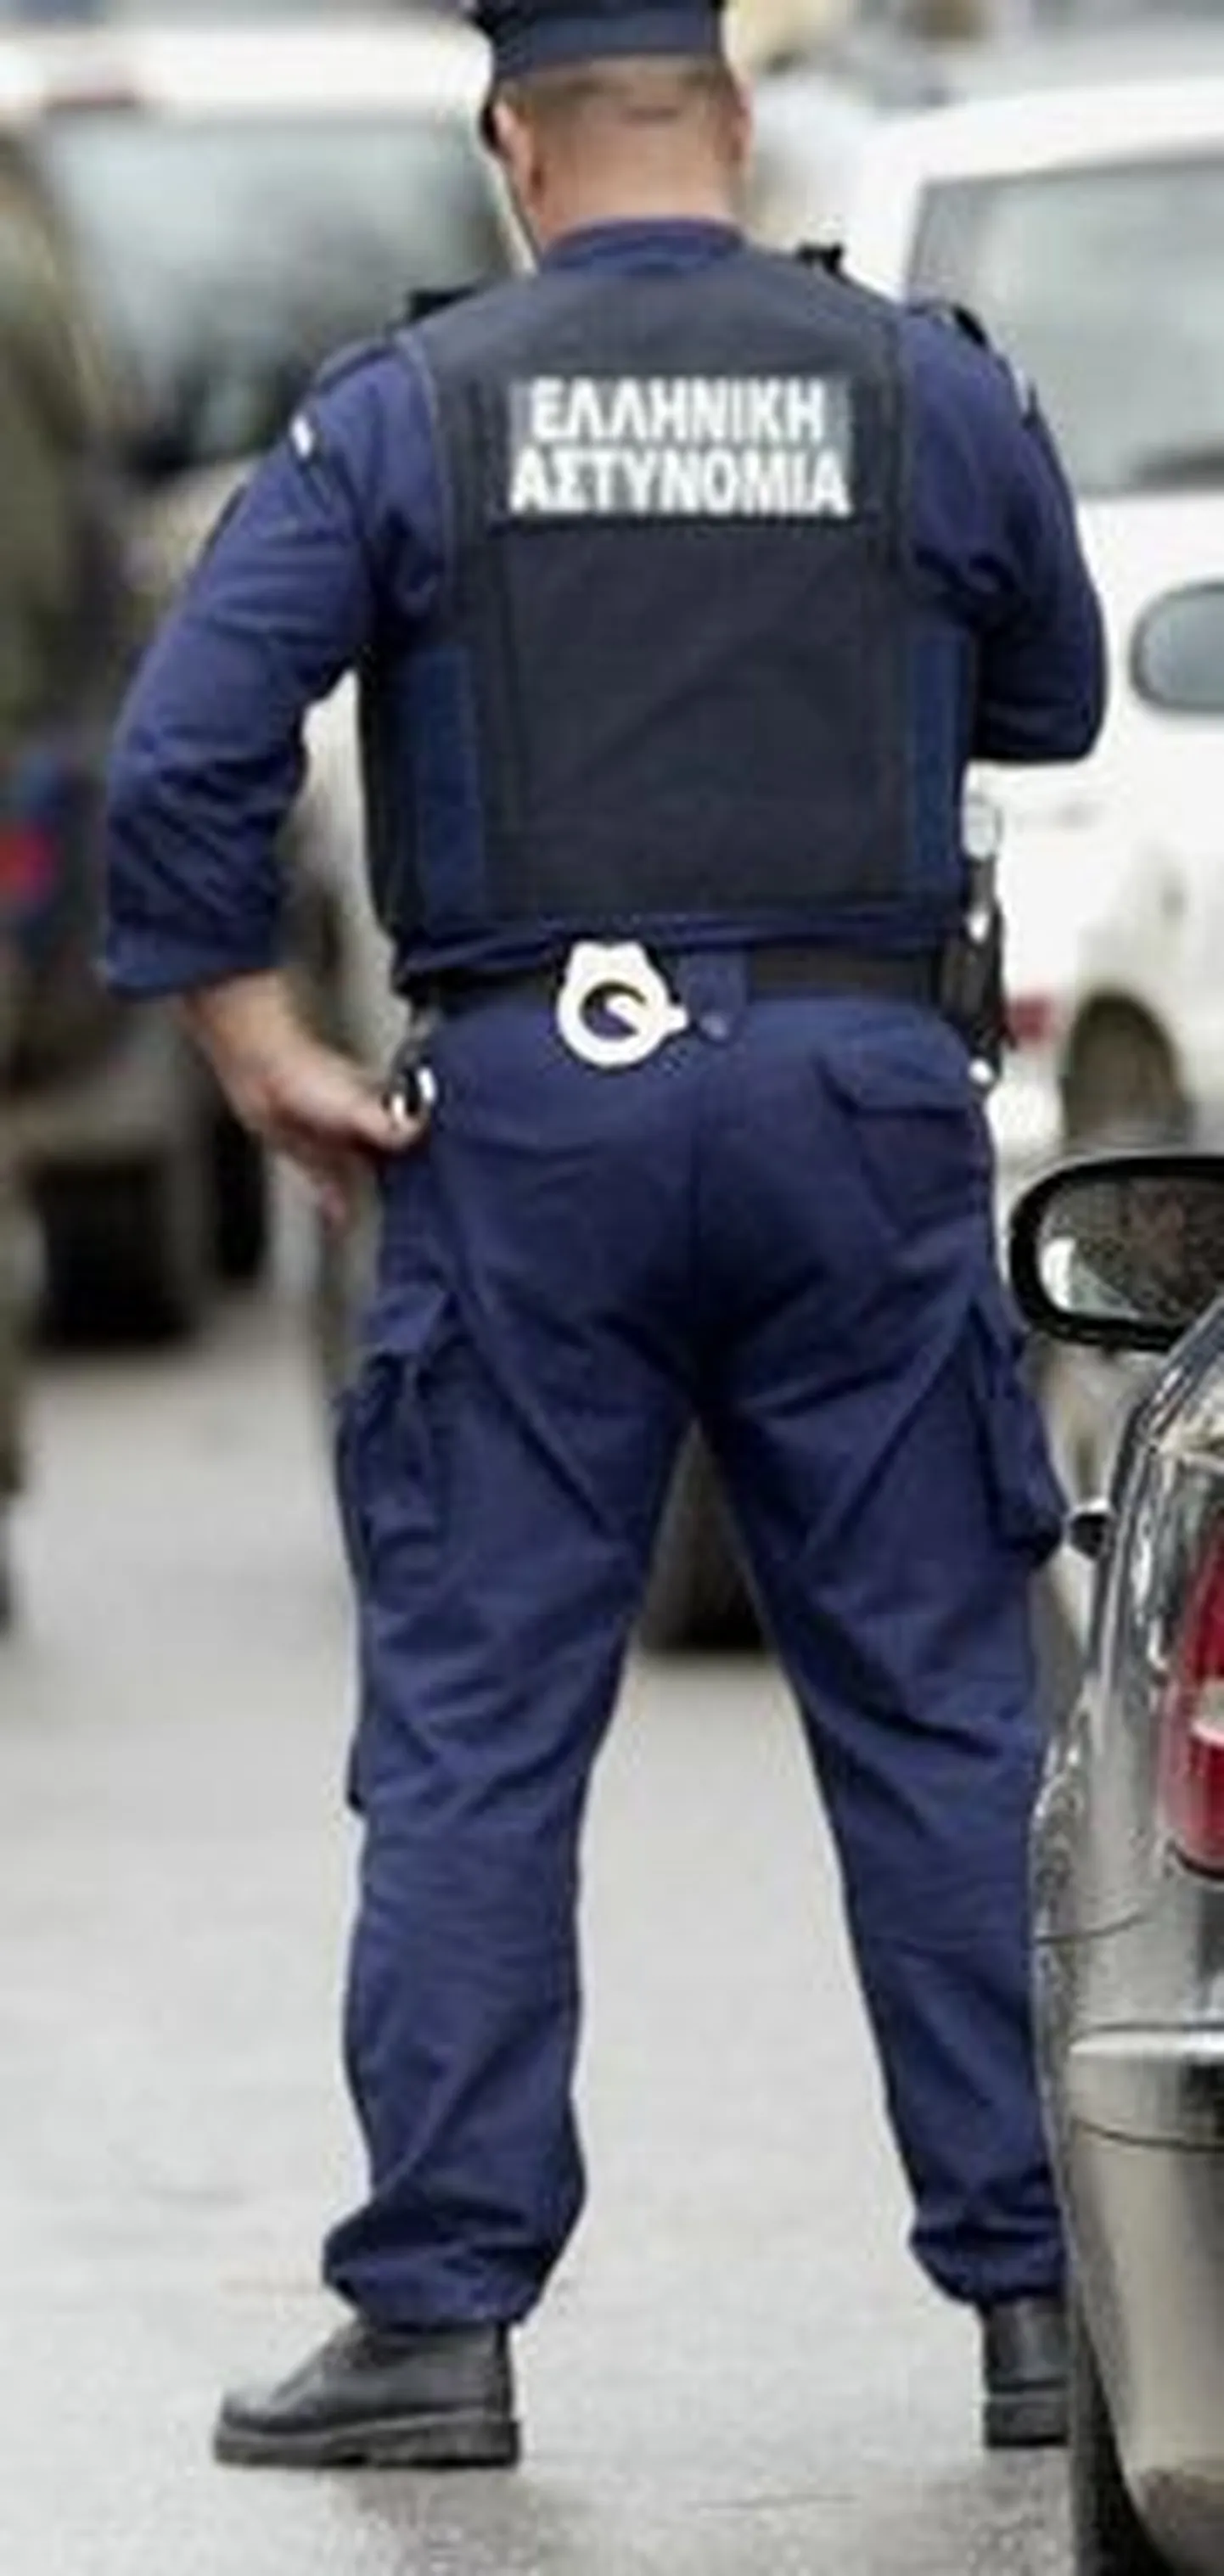 Kreeka politseinik